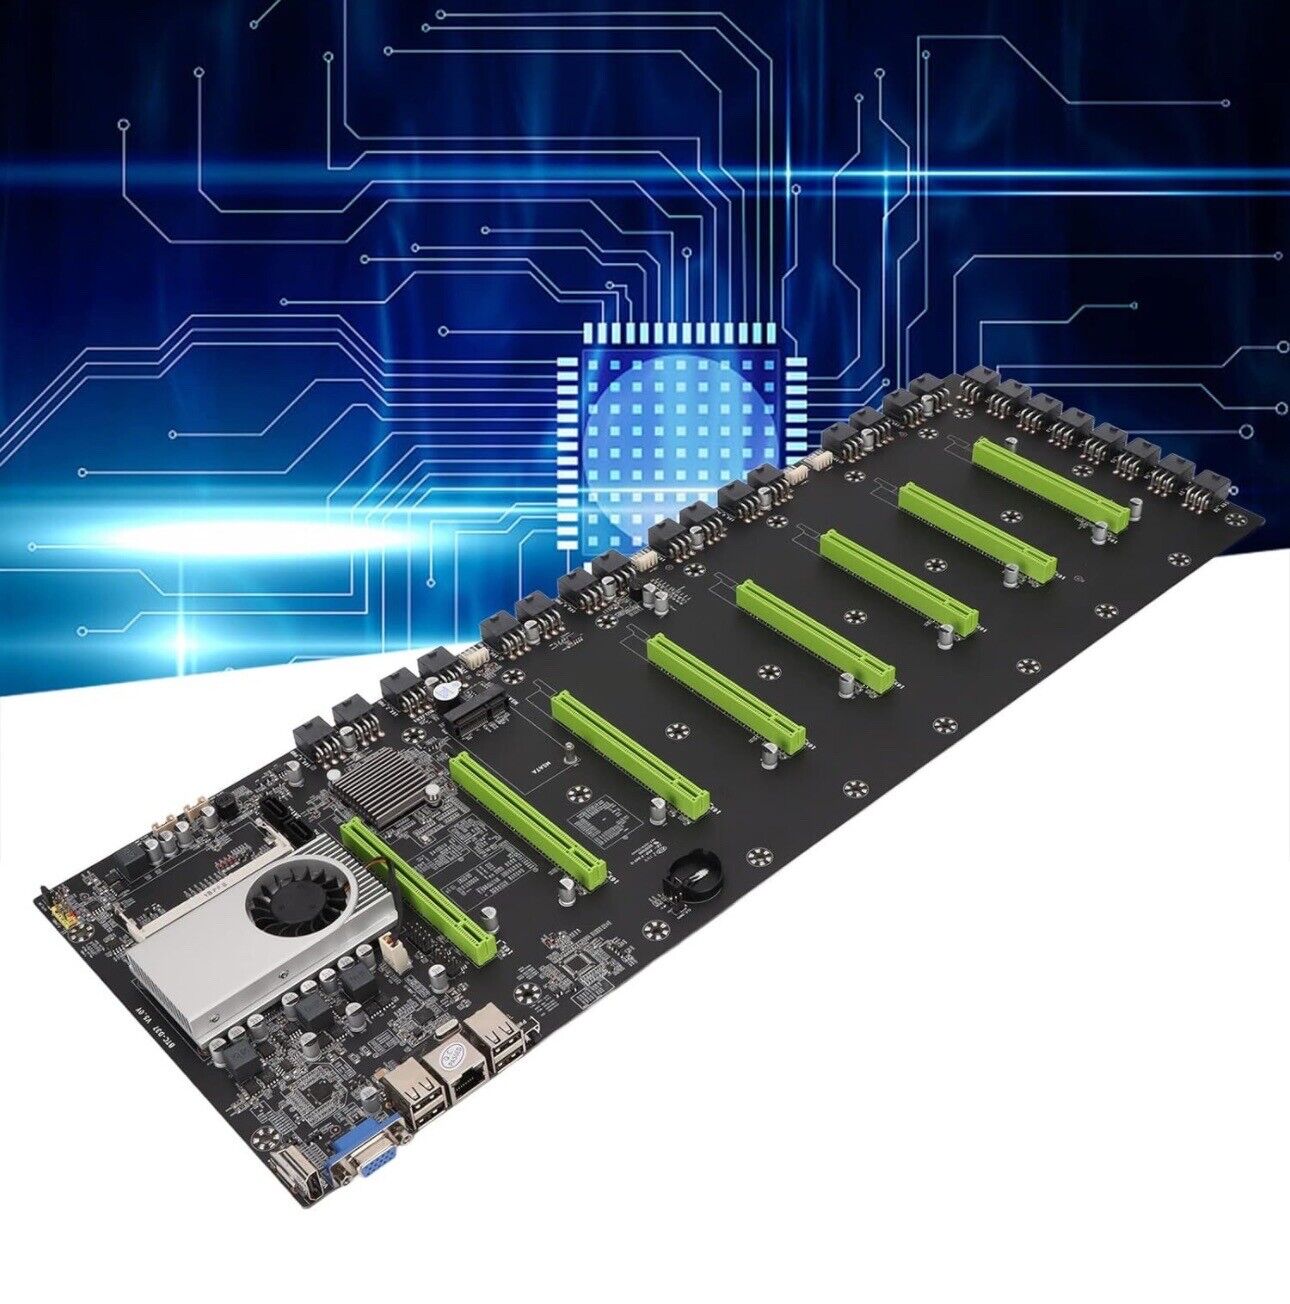 BTC-D37 Mining Rig Machine Motherboard With CPU Support 8 GPU PCIE Slot VGA HDMI